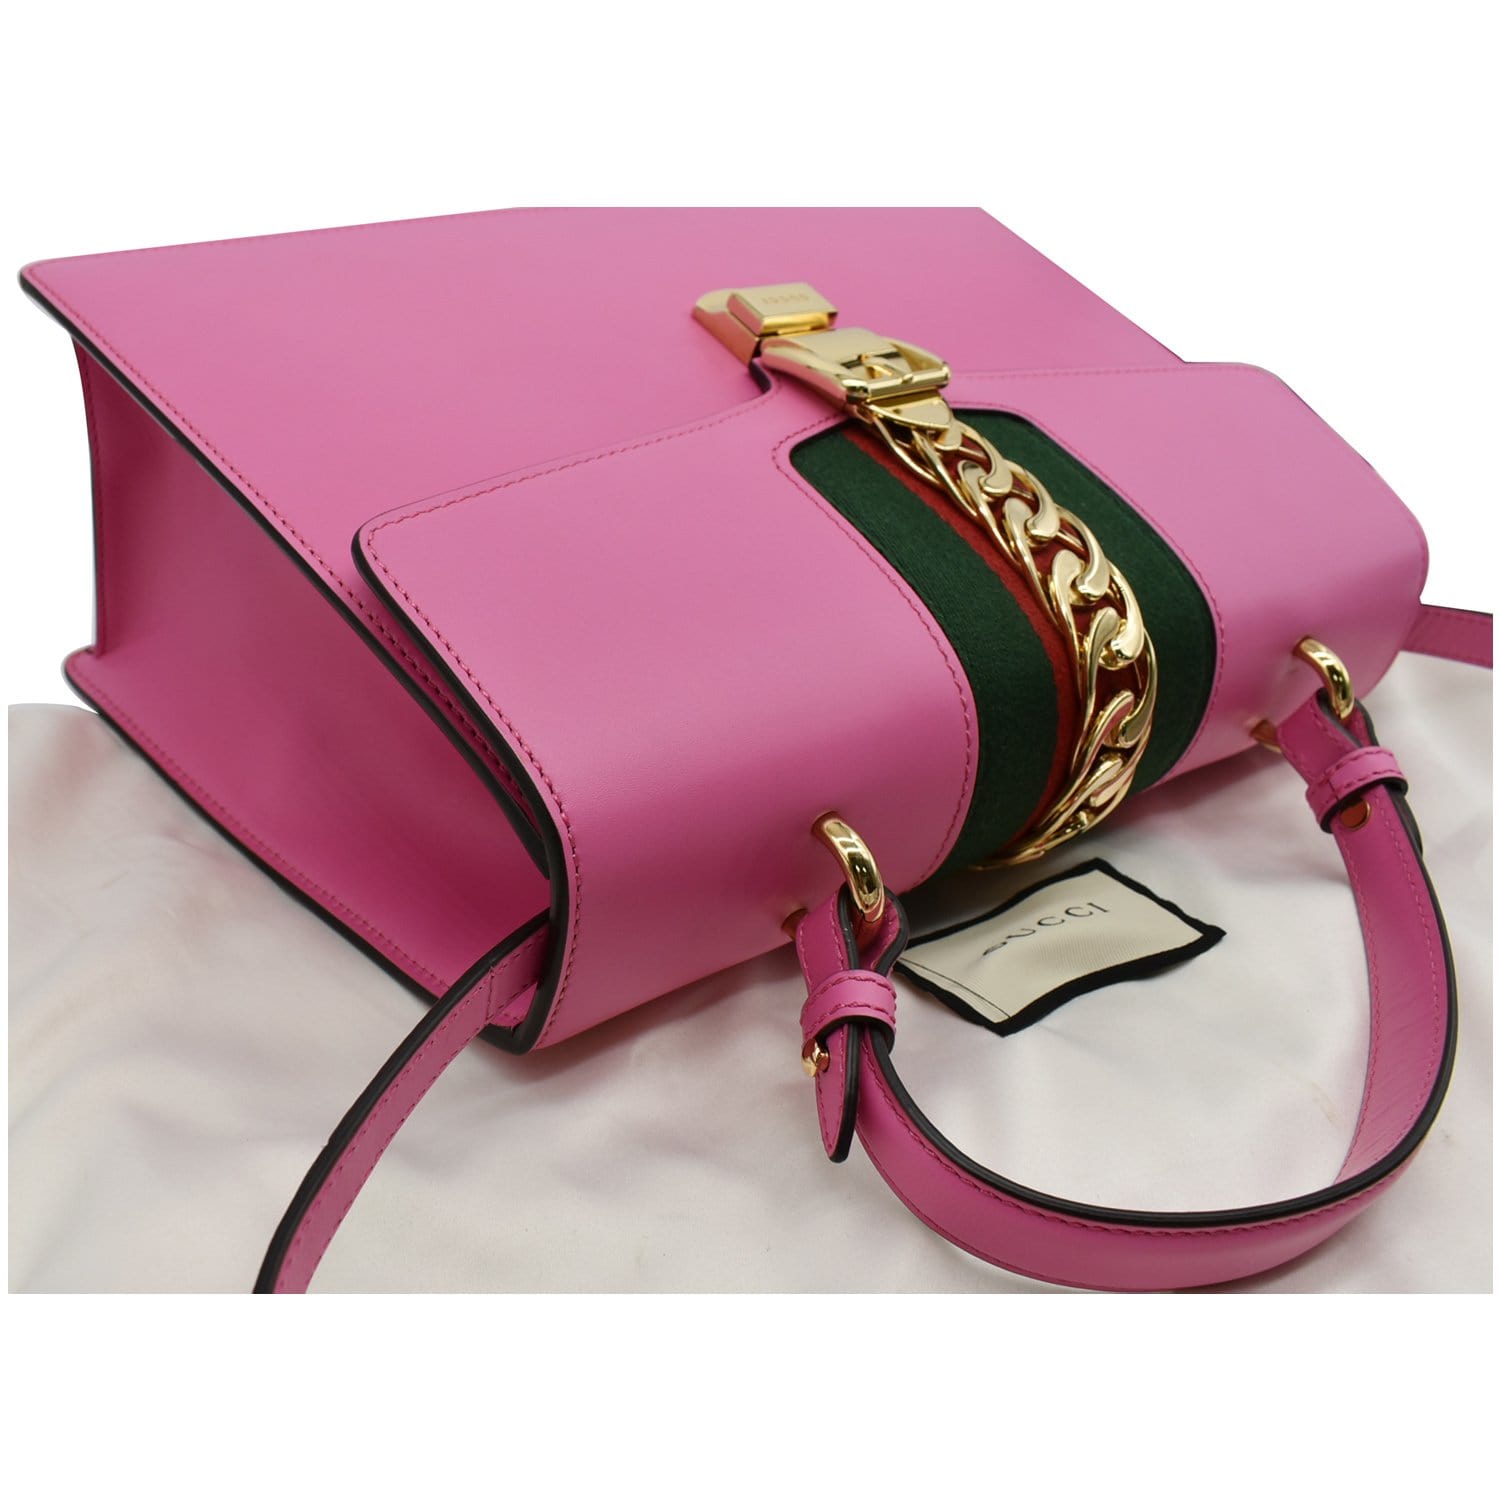 GUCCI Sylvie Medium Web Smooth Leather Top Handle Shoulder Bag Pink 43